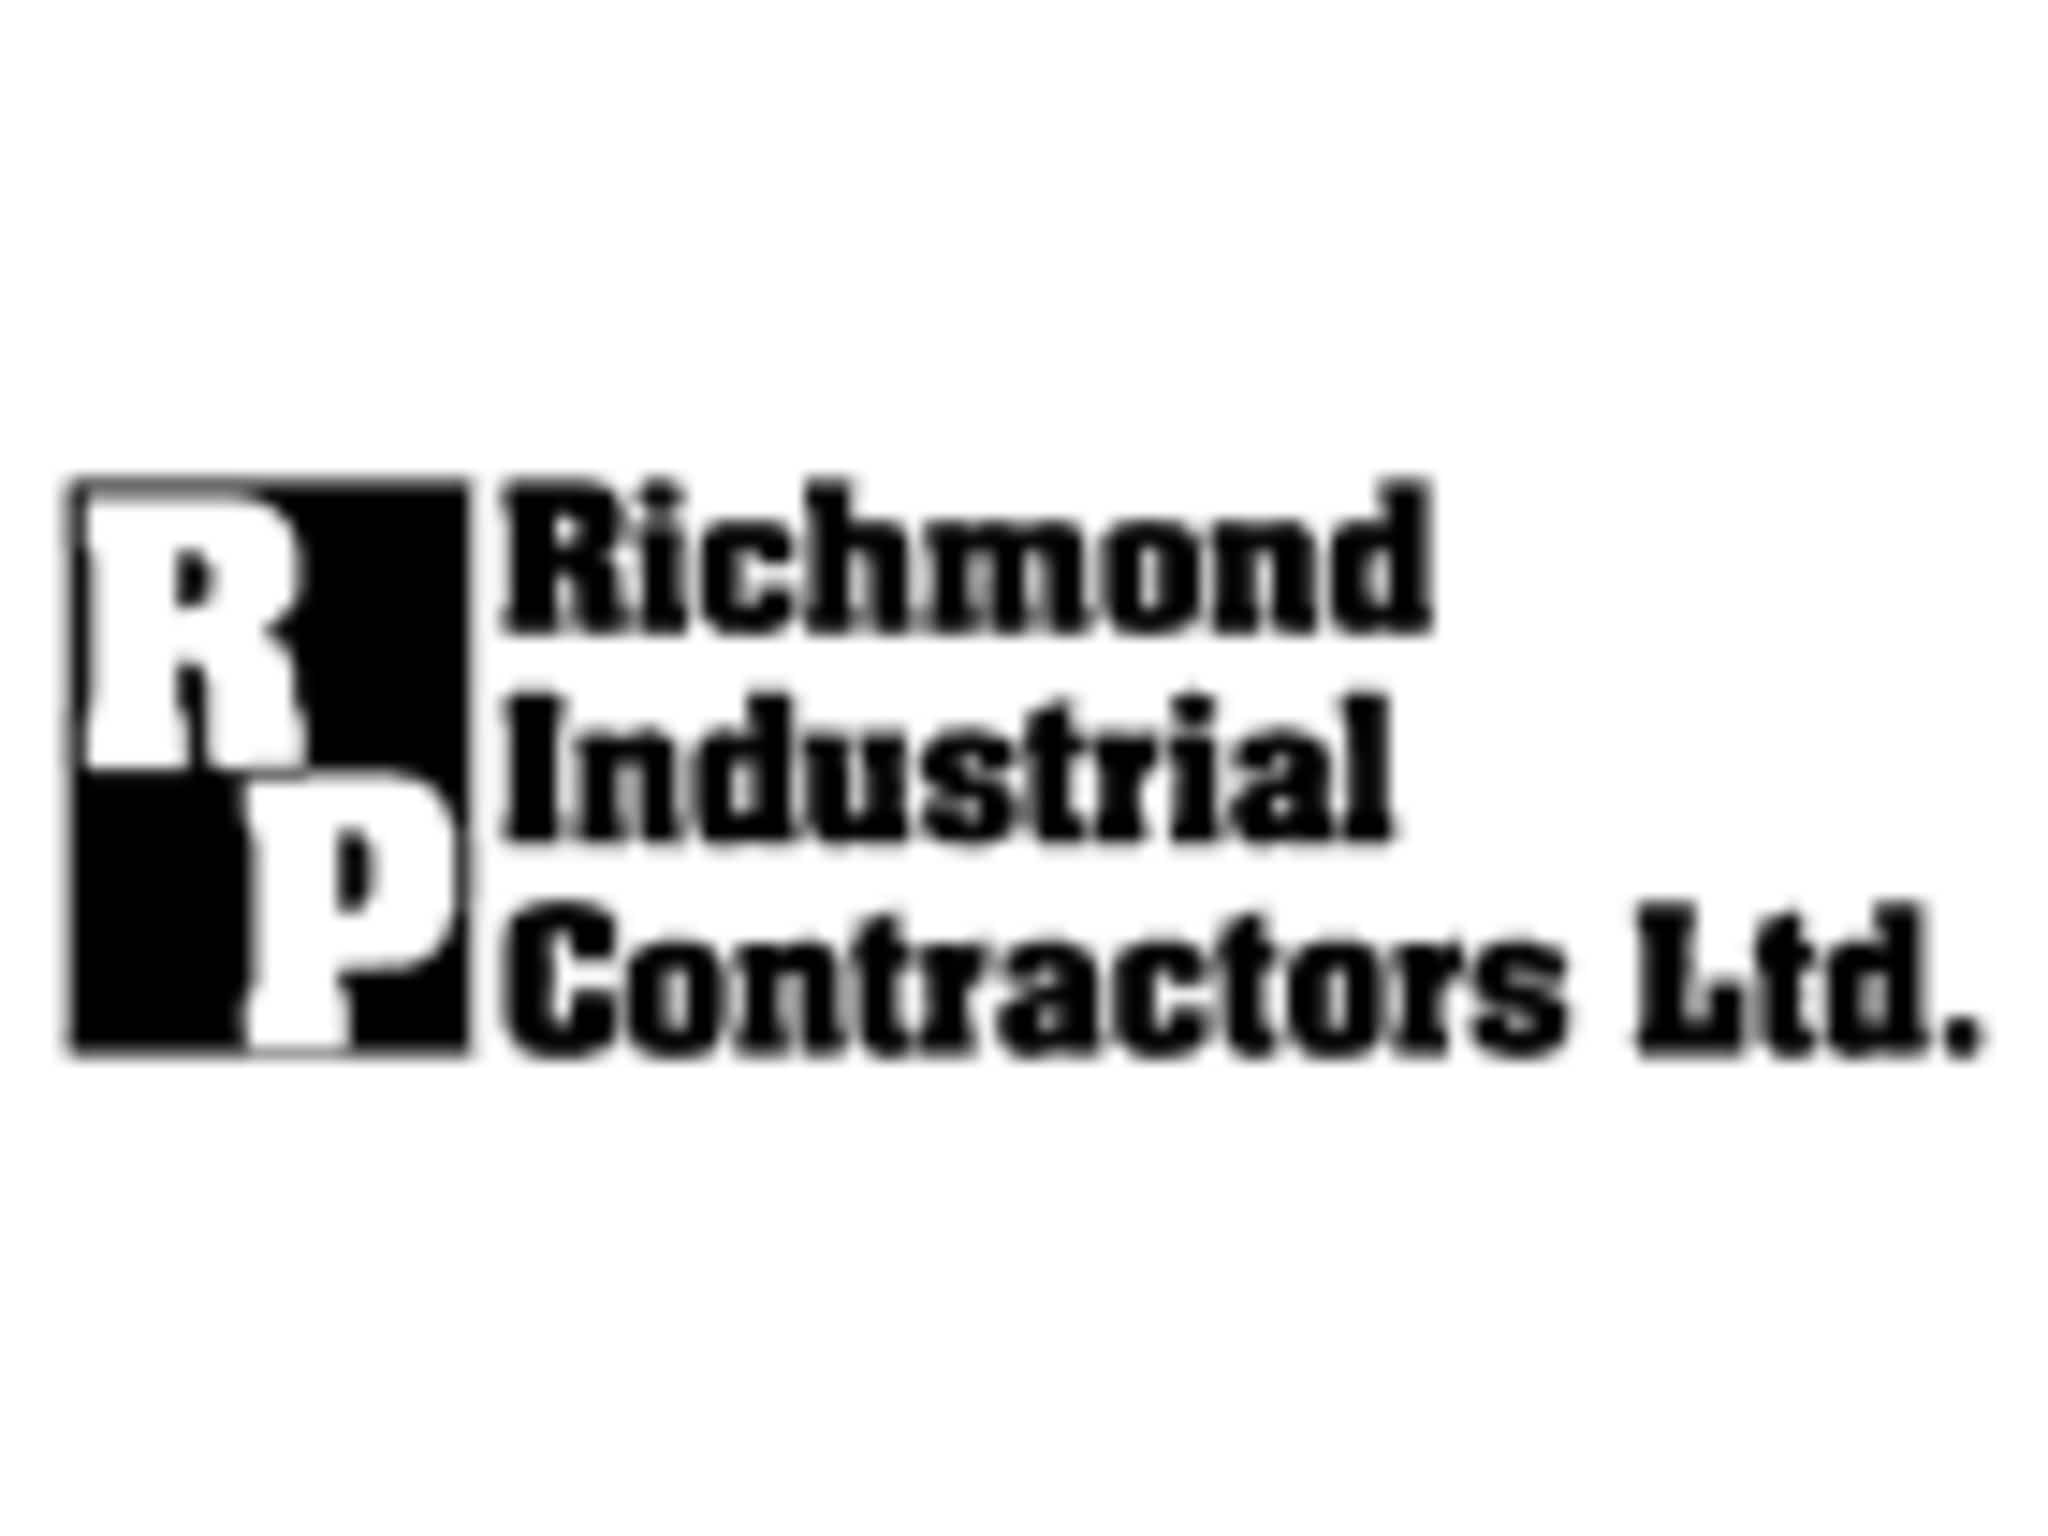 photo R P Richmond Industrial Contractors